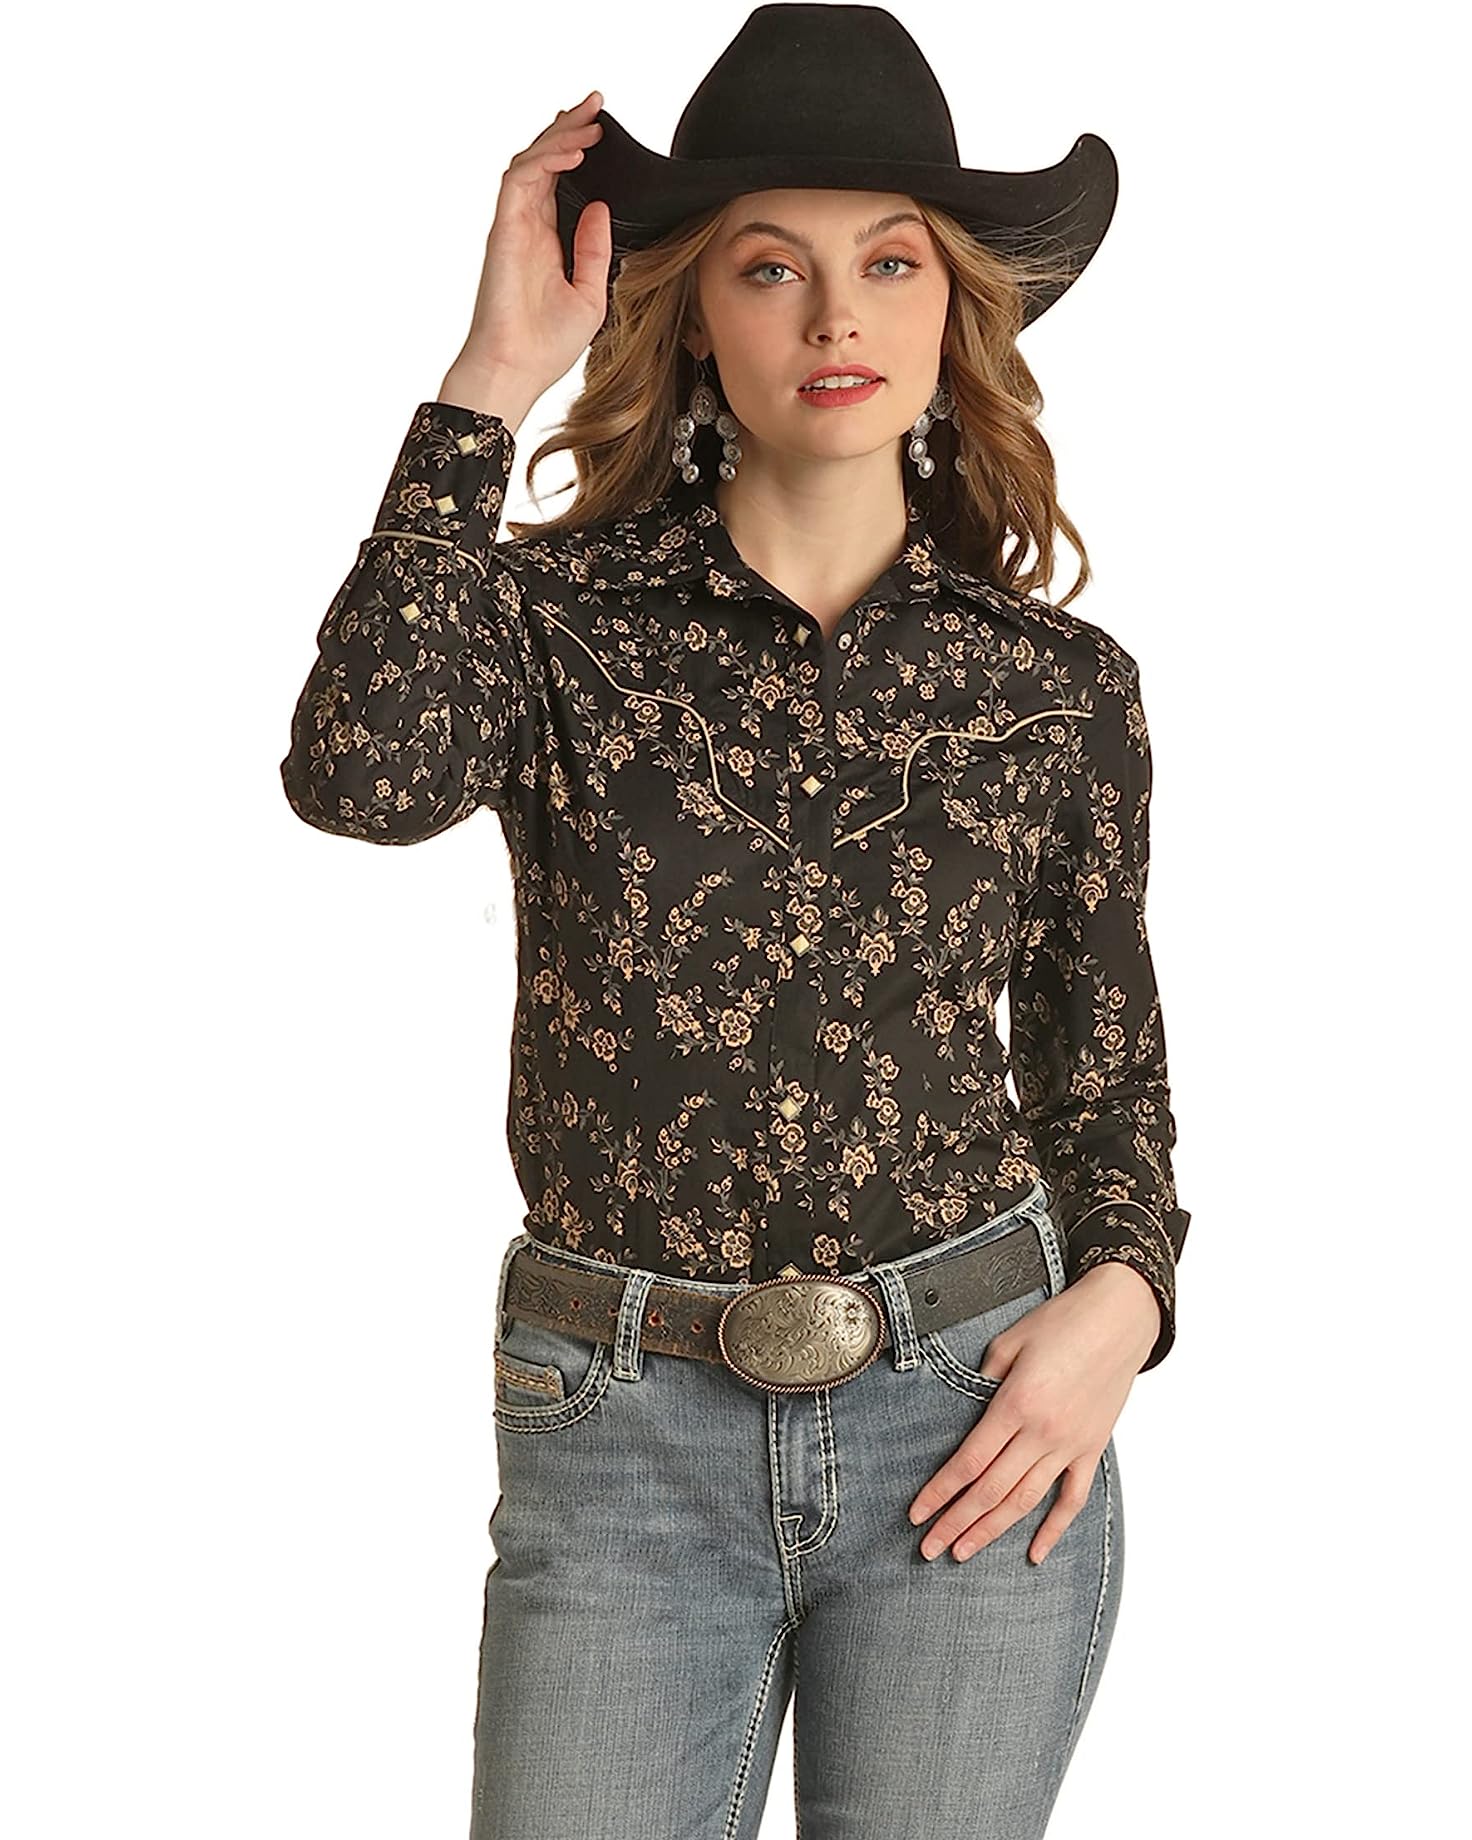 PANHANDLE SLIM Shirts Rock & Roll Cowgirl Women's Floral Print Long Sleeve Snap Western Shirt RRWSOSRZ0X